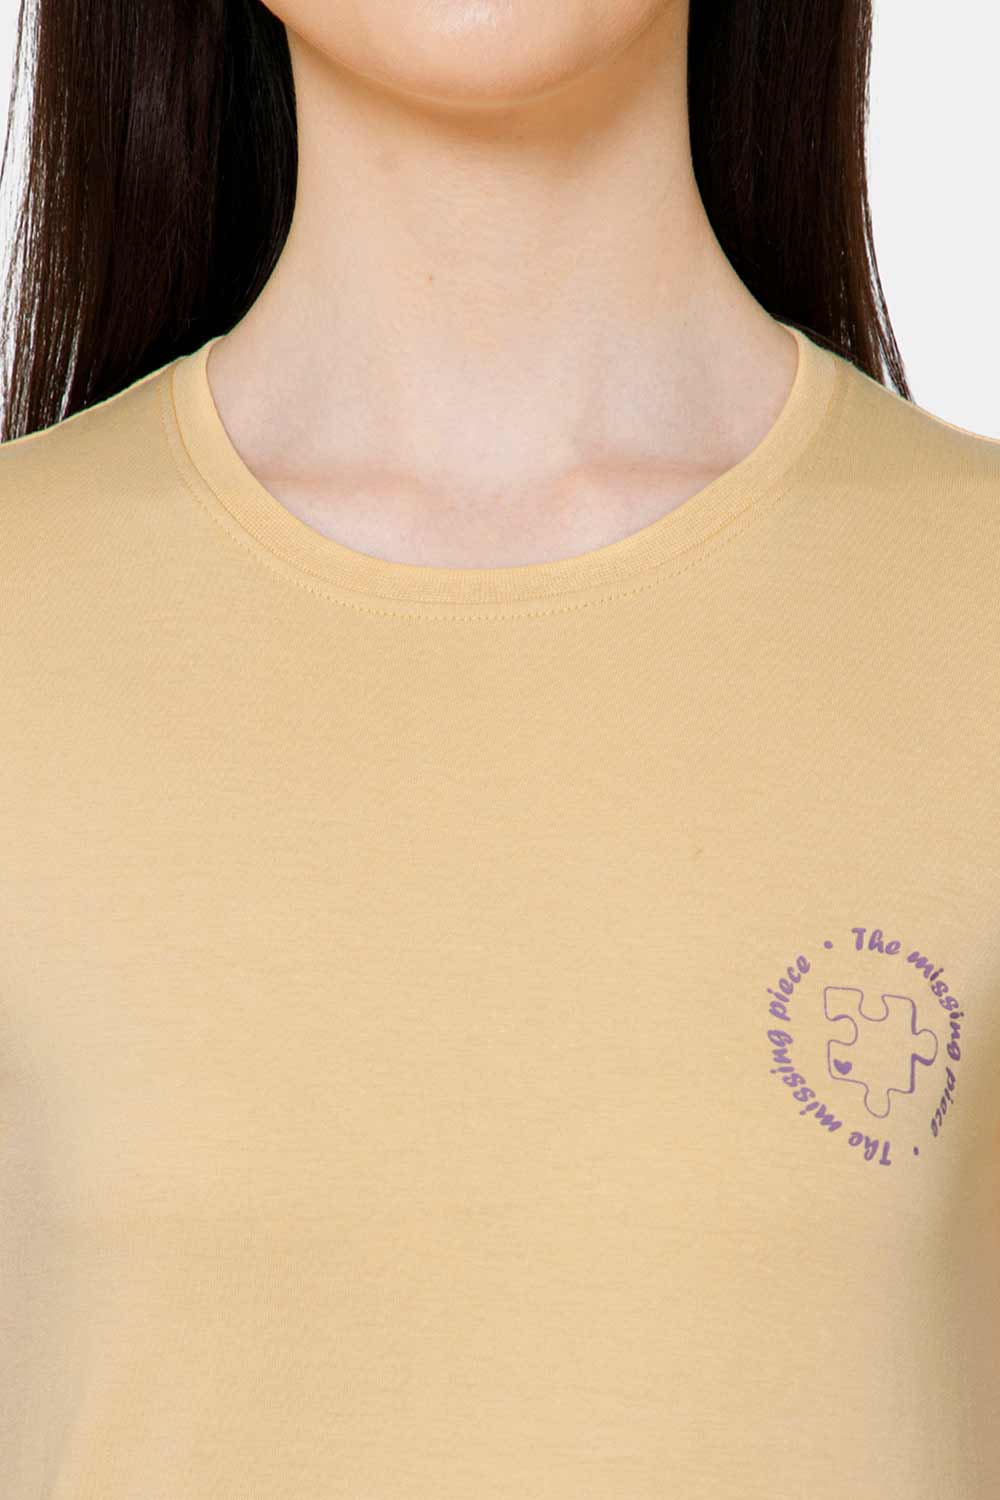 Jusperf Women's Printed Crew Neck Casual T-Shirt - Beige - TS30